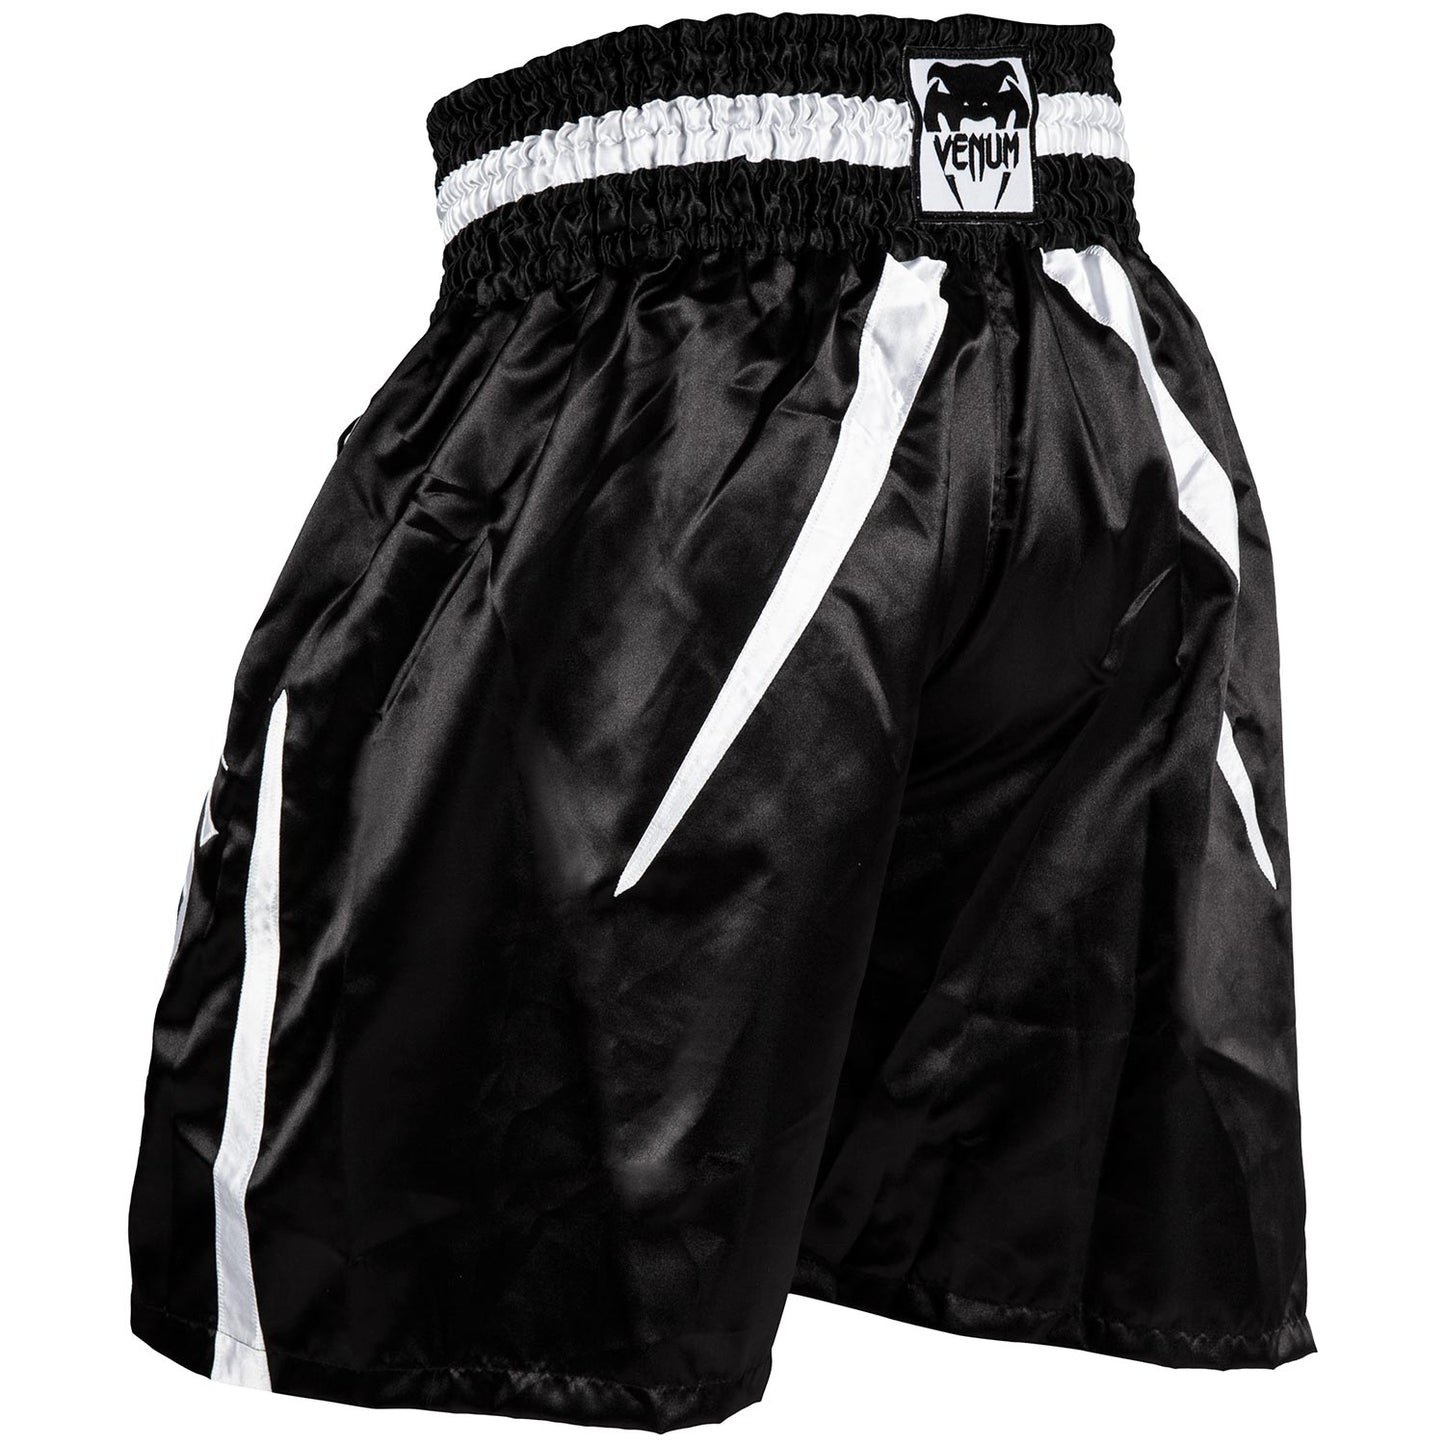 Venum Elite Boxing Shorts - Black/White